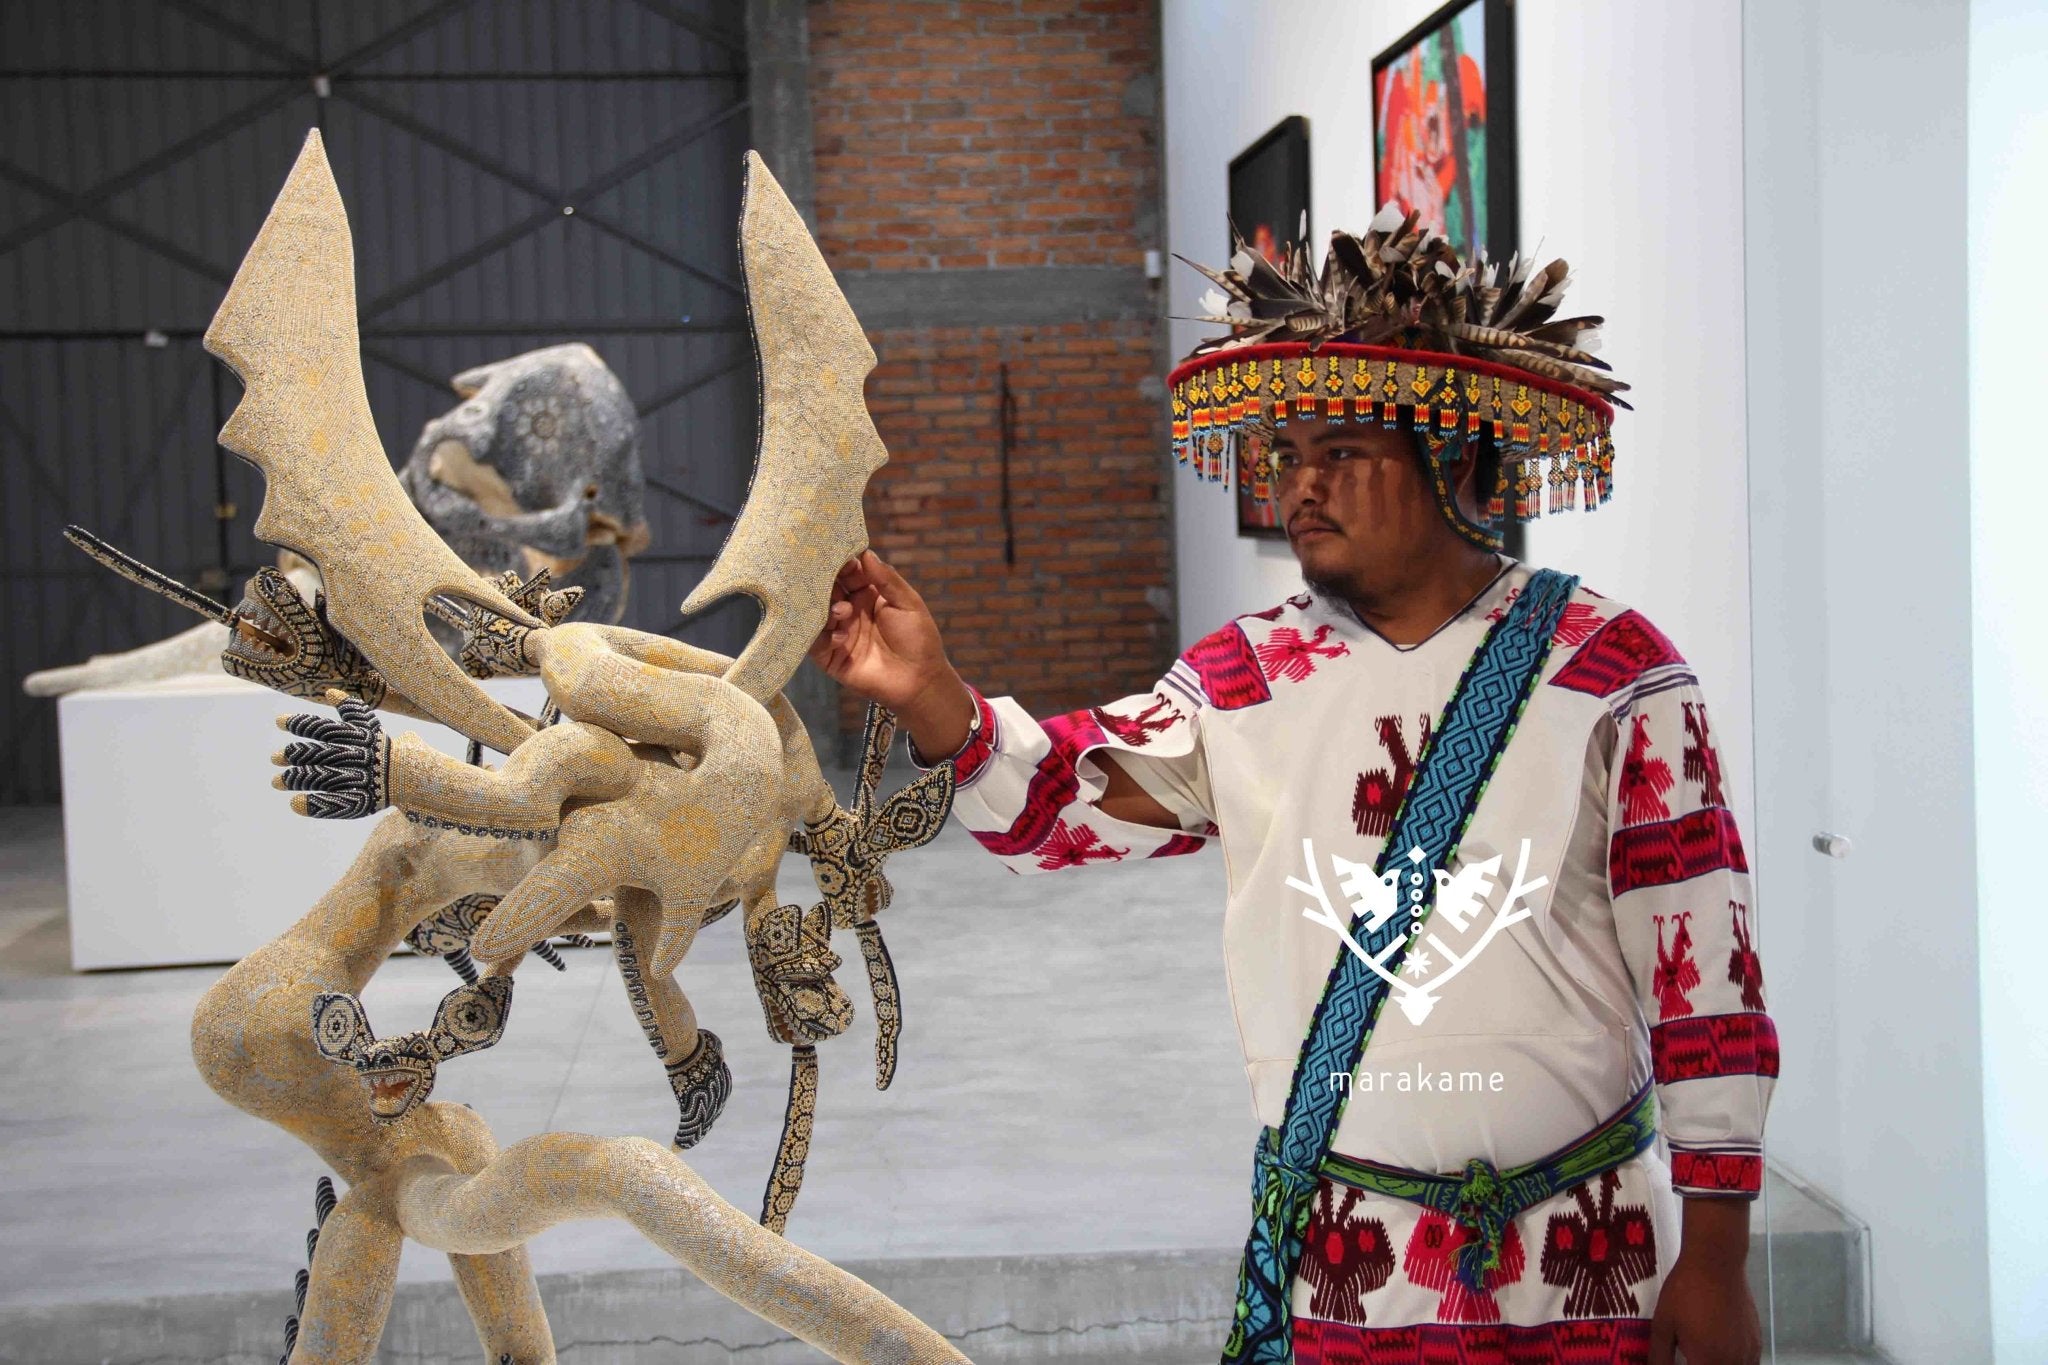 Las mejores Esculturas en Arte Huichol - Arte Huichol - Marakame